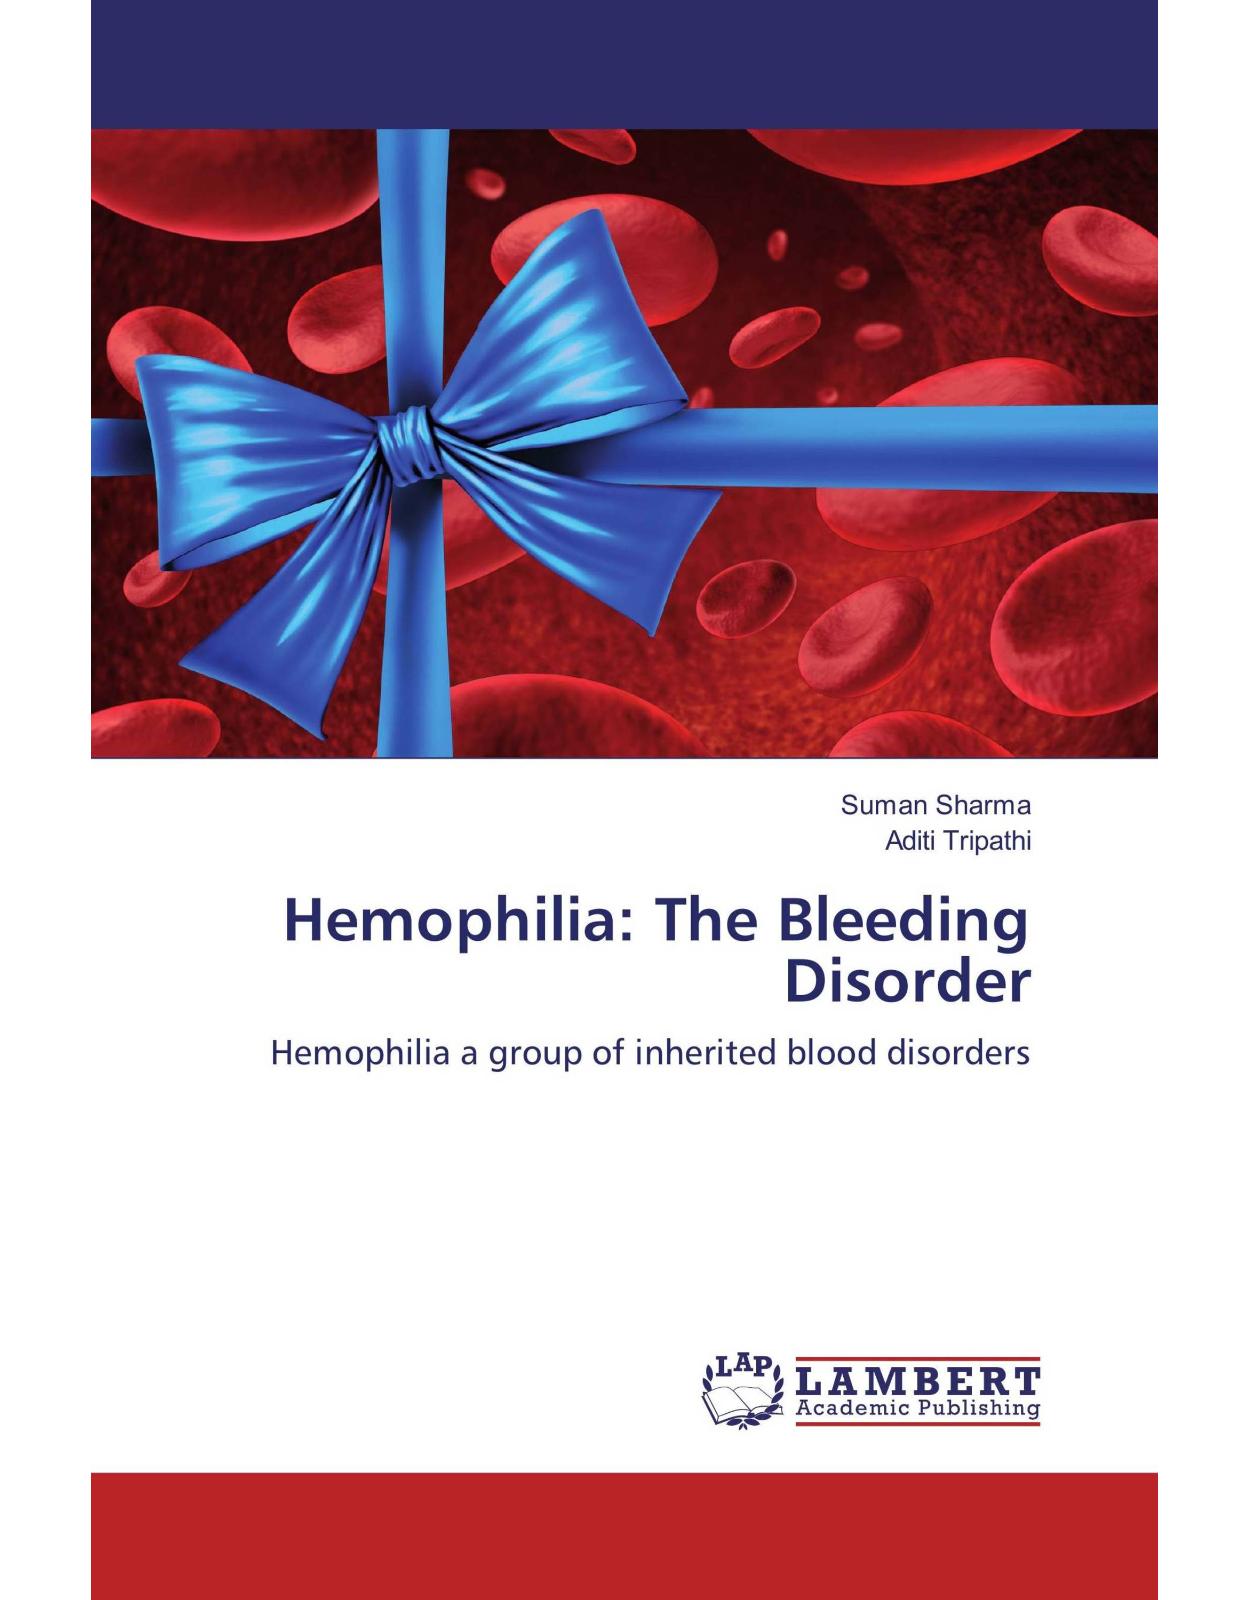 Hemophilia: The Bleeding Disorder. Hemophilia a group of inherited blood disorders